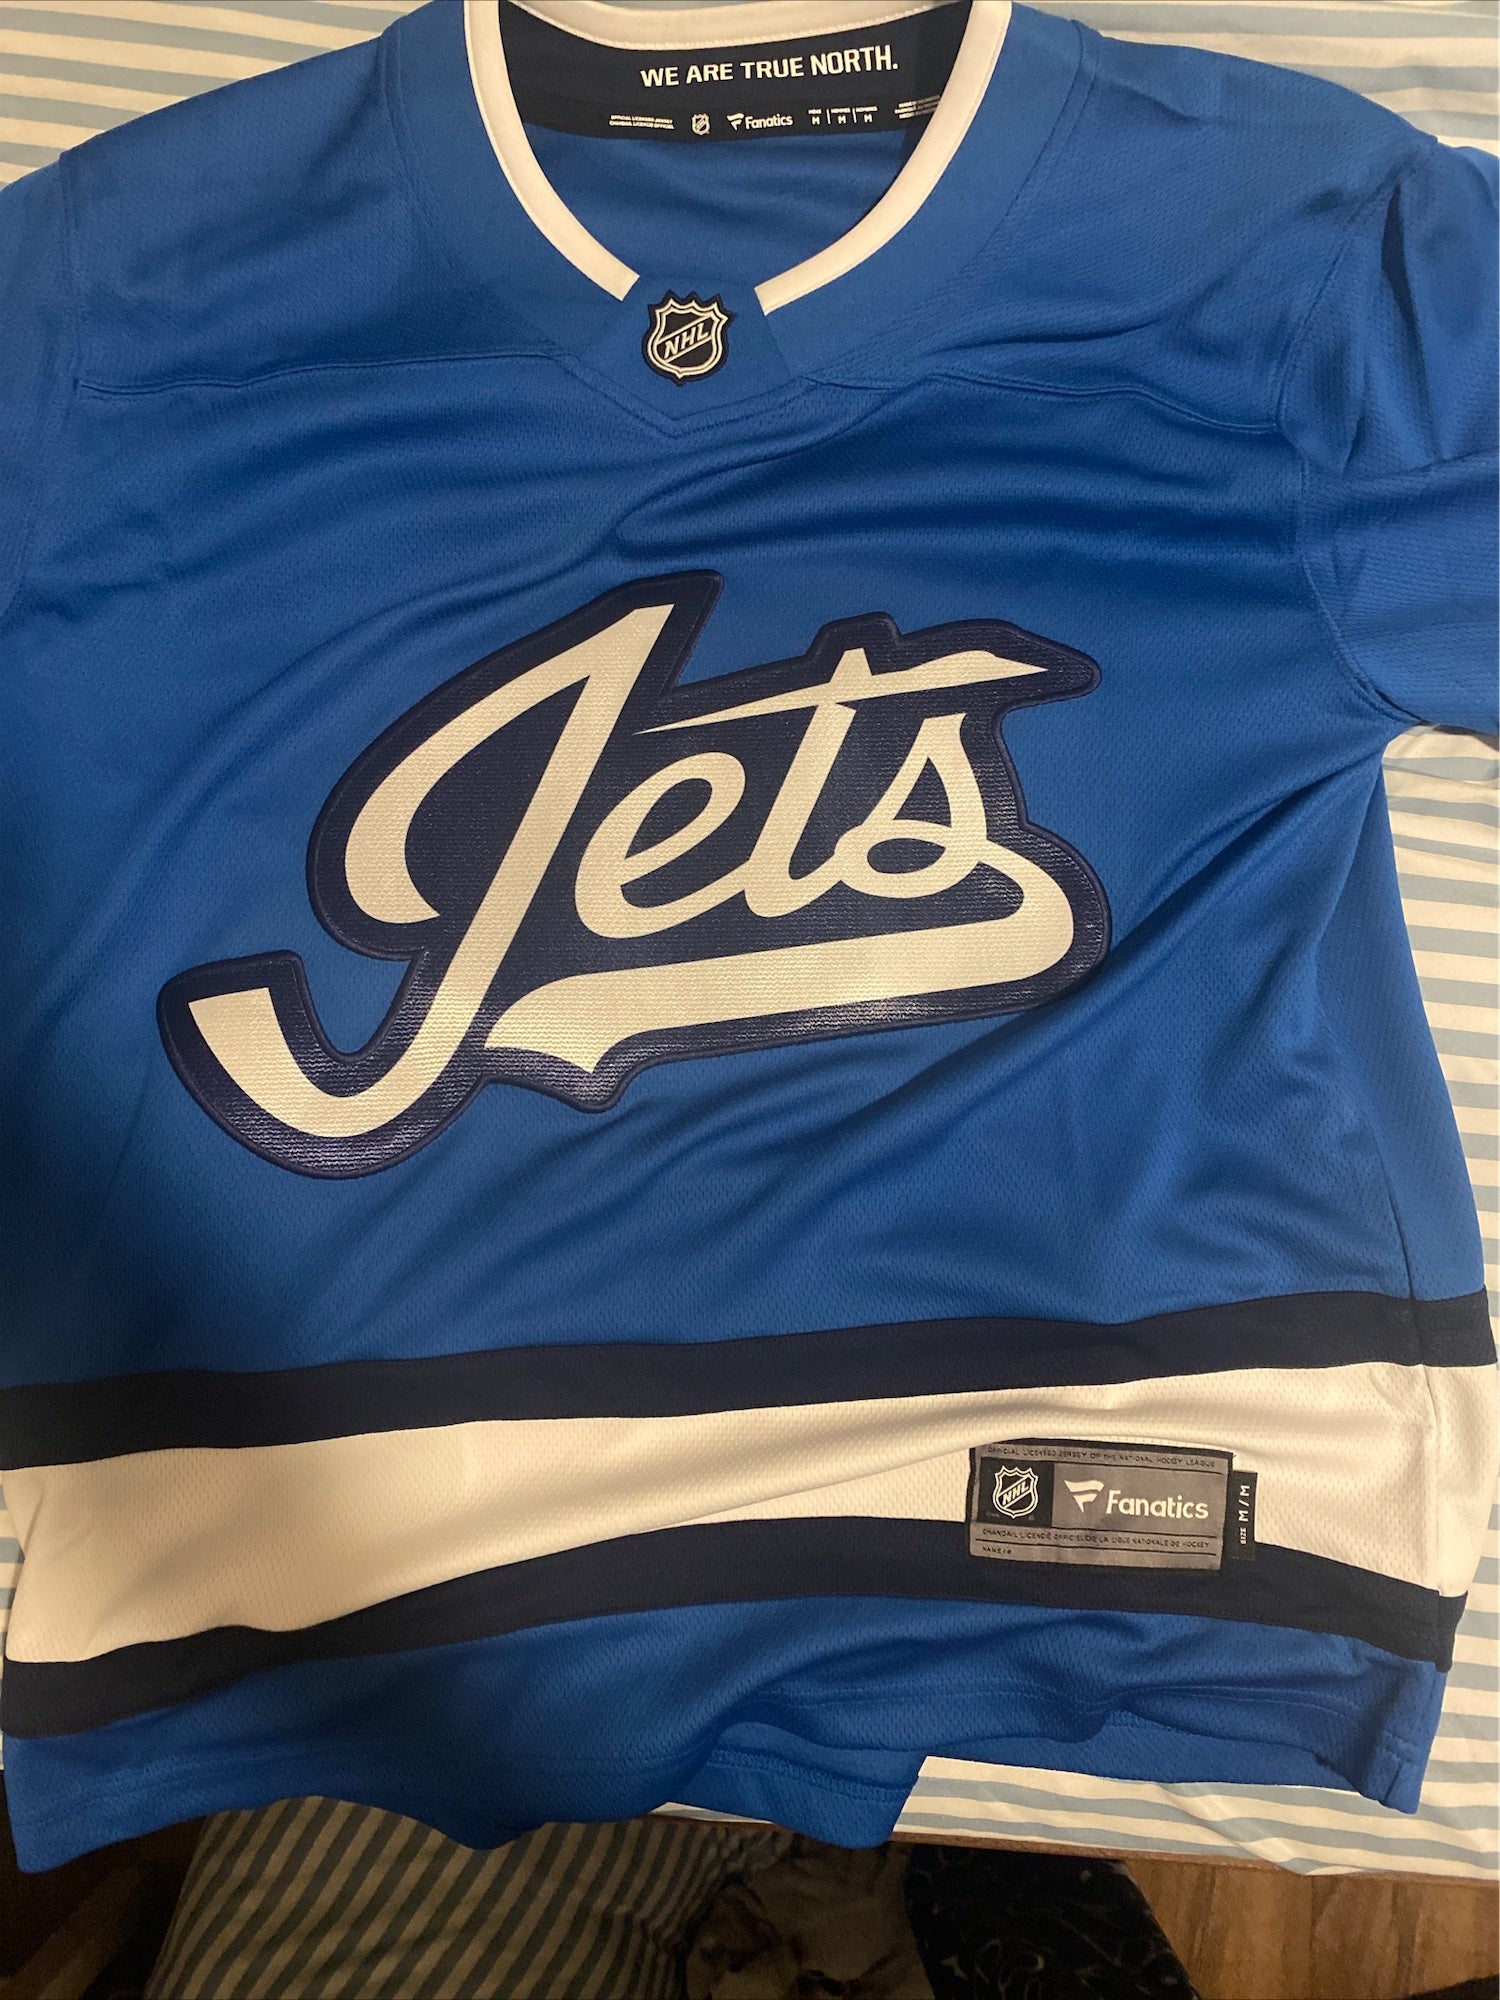 Fanatics Men's NHL Winnipeg Jets Blank Jersey, Medium, Blue